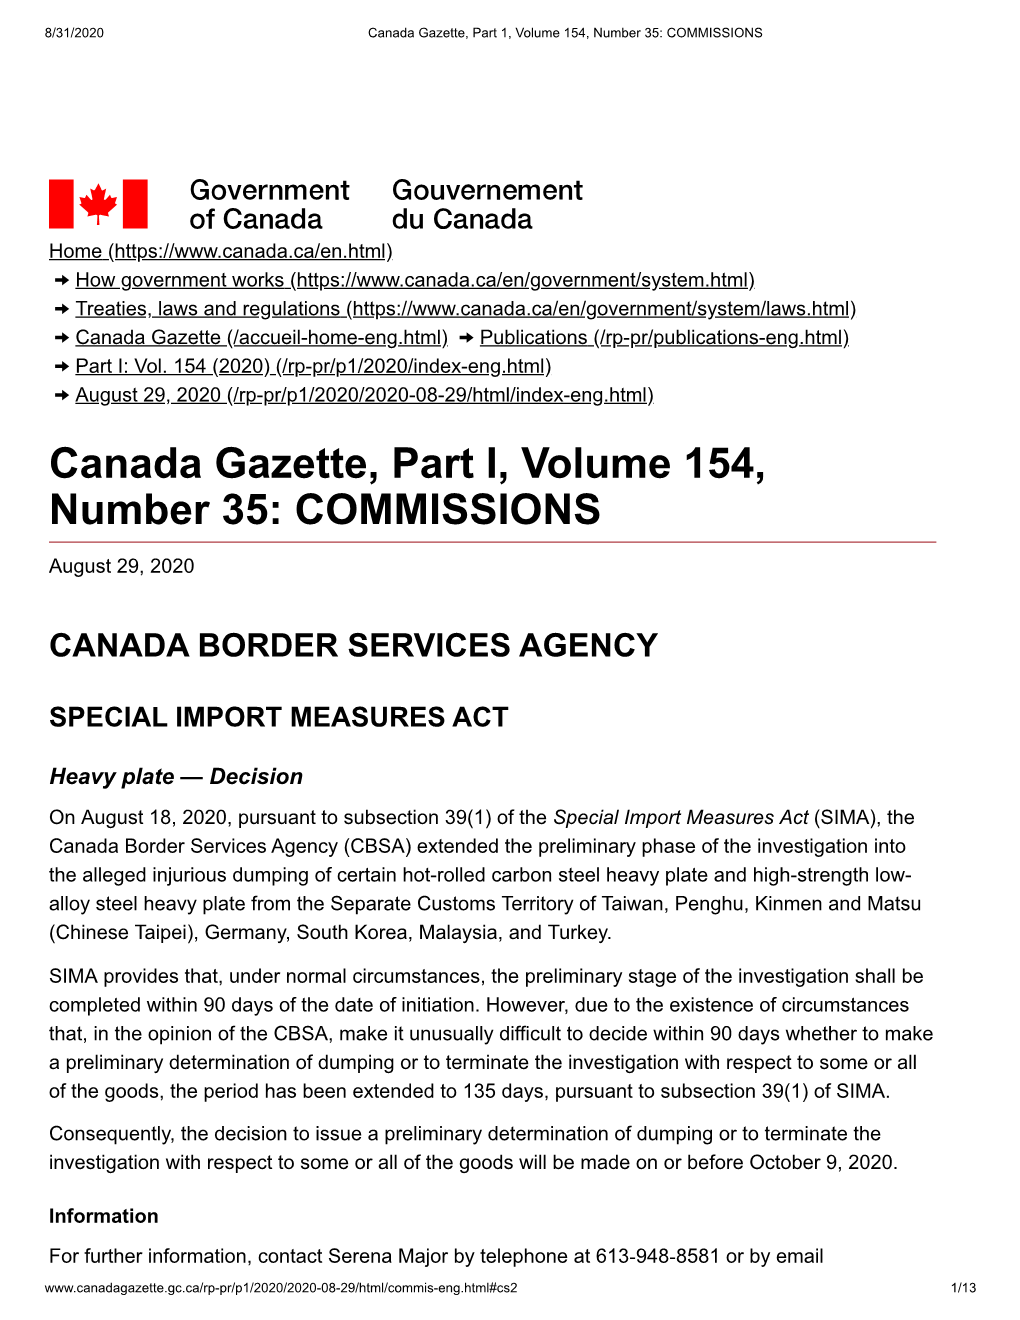 Canada Gazette, Part I, Volume 154, Number 35: COMMISSIONS